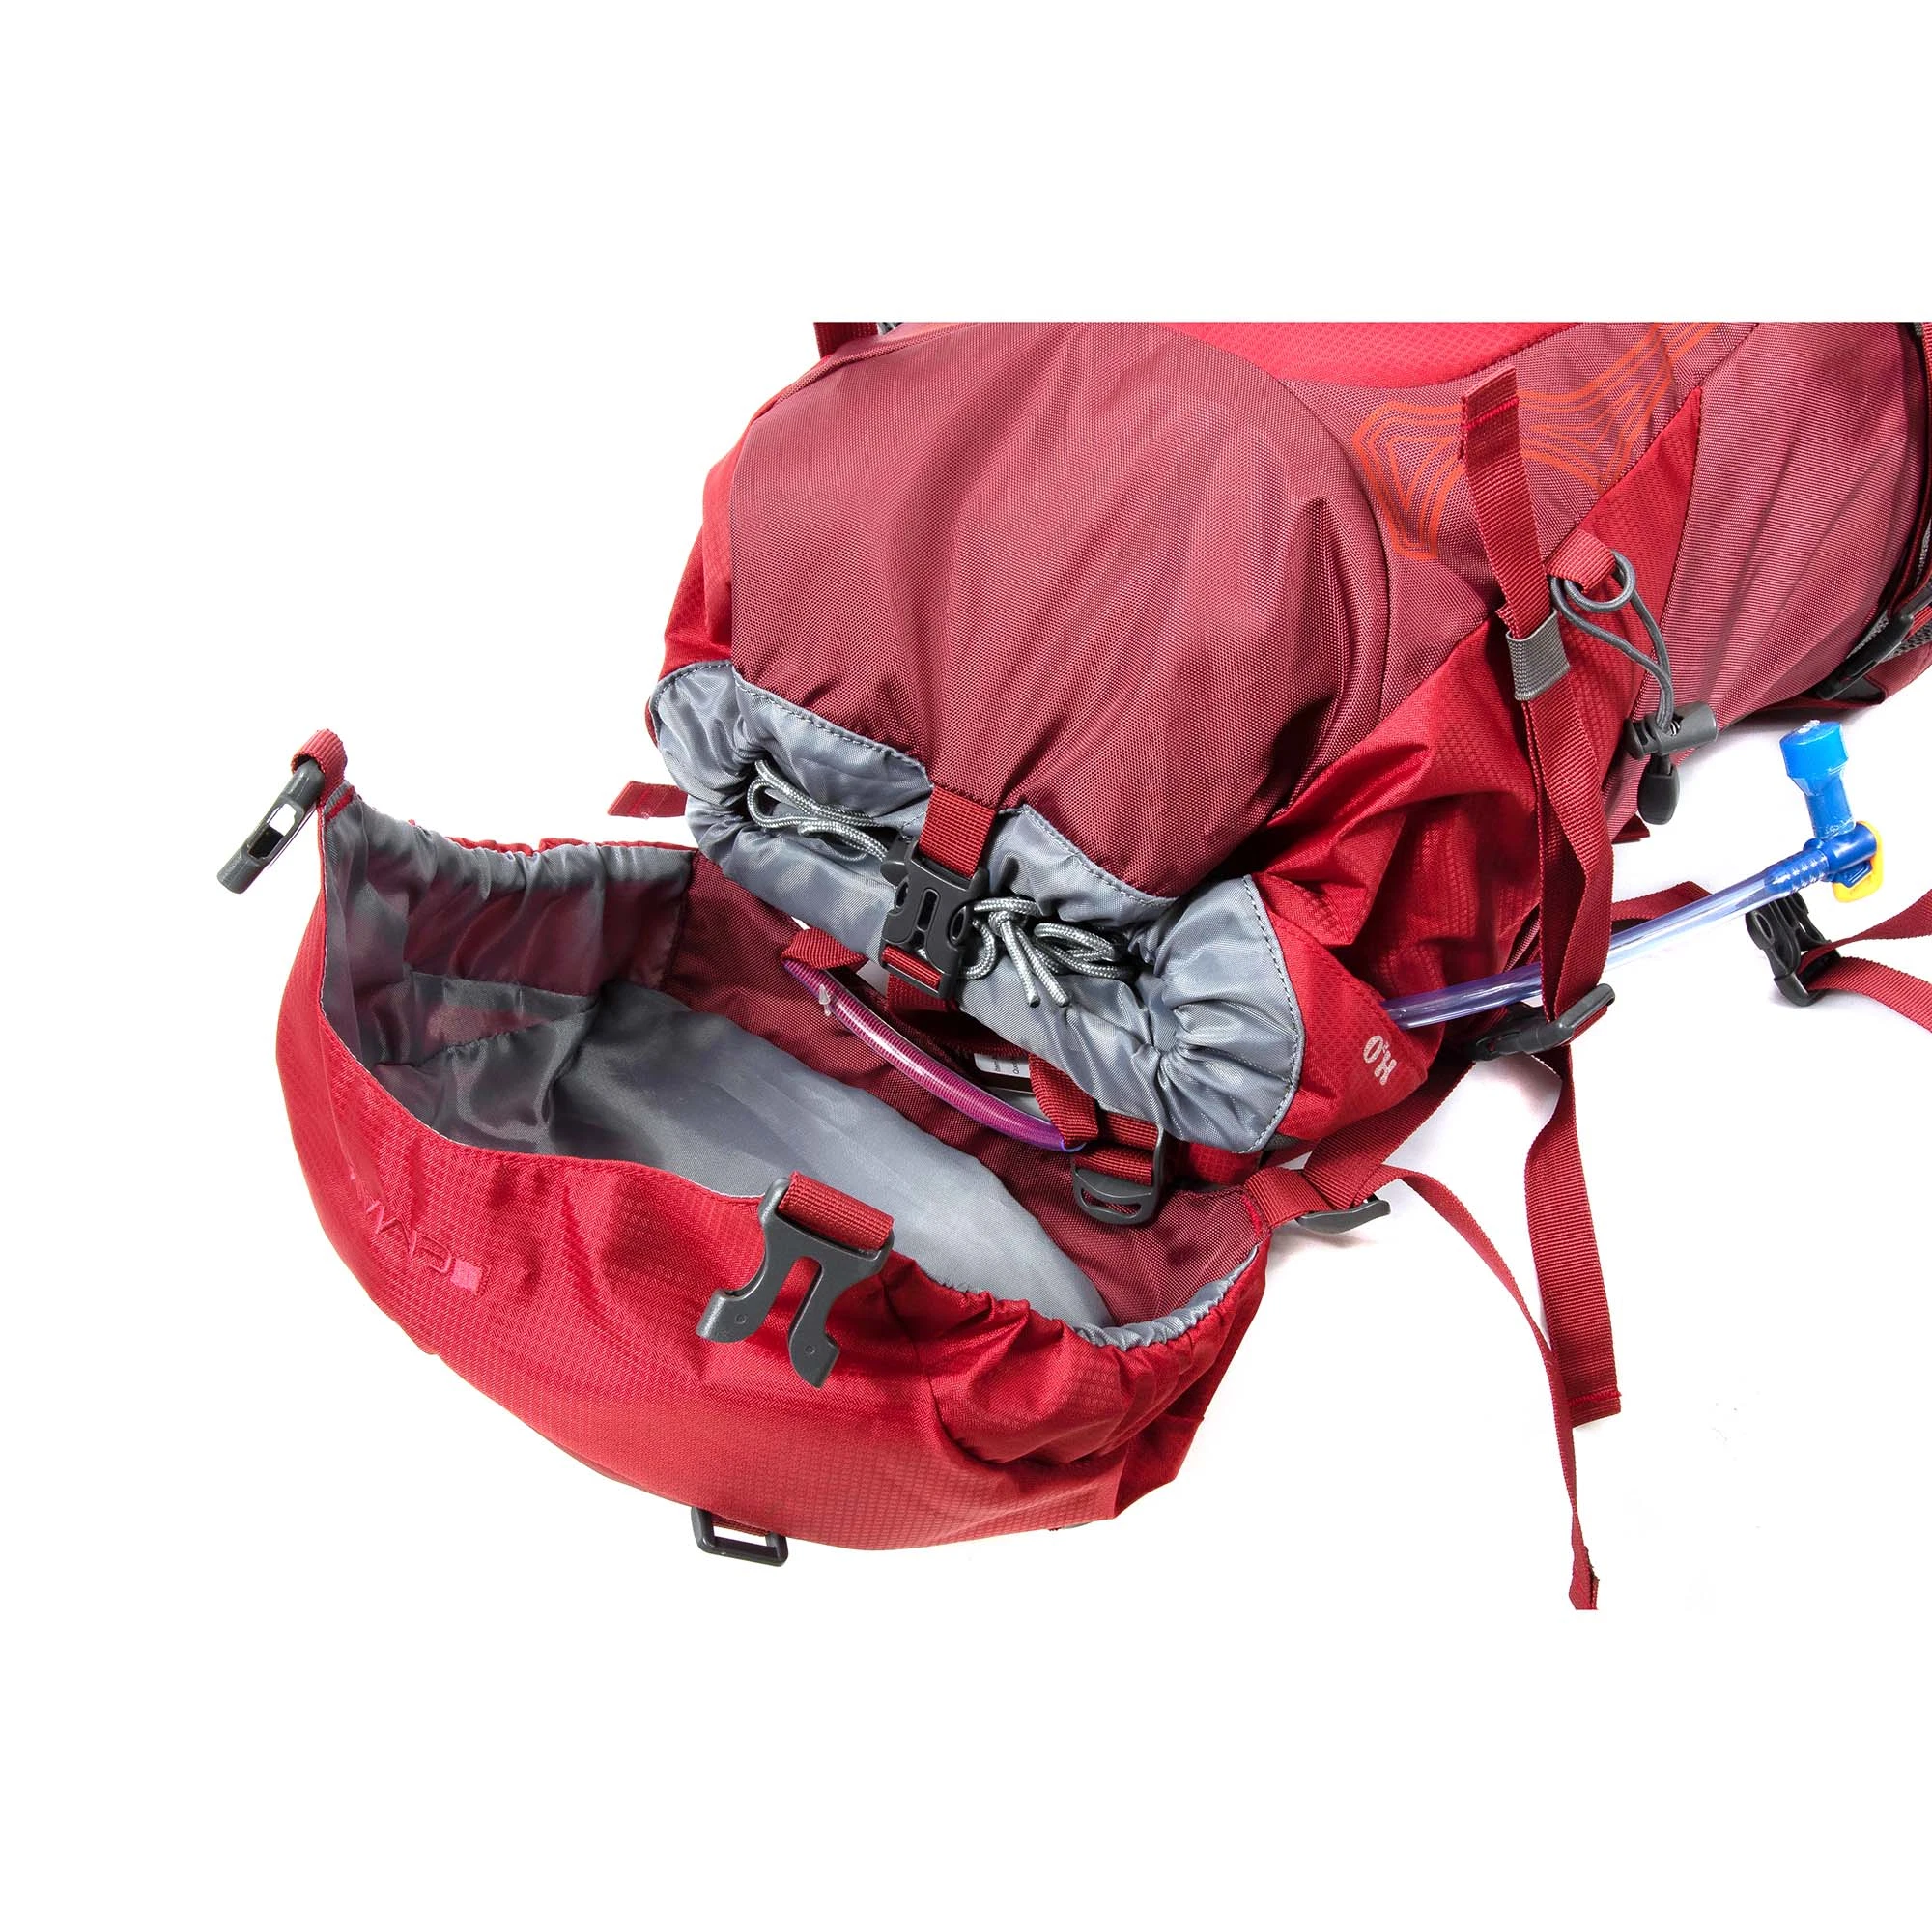 Outdoor Sport Bags Travel Backpack 2020 Trend 30L Rucksack